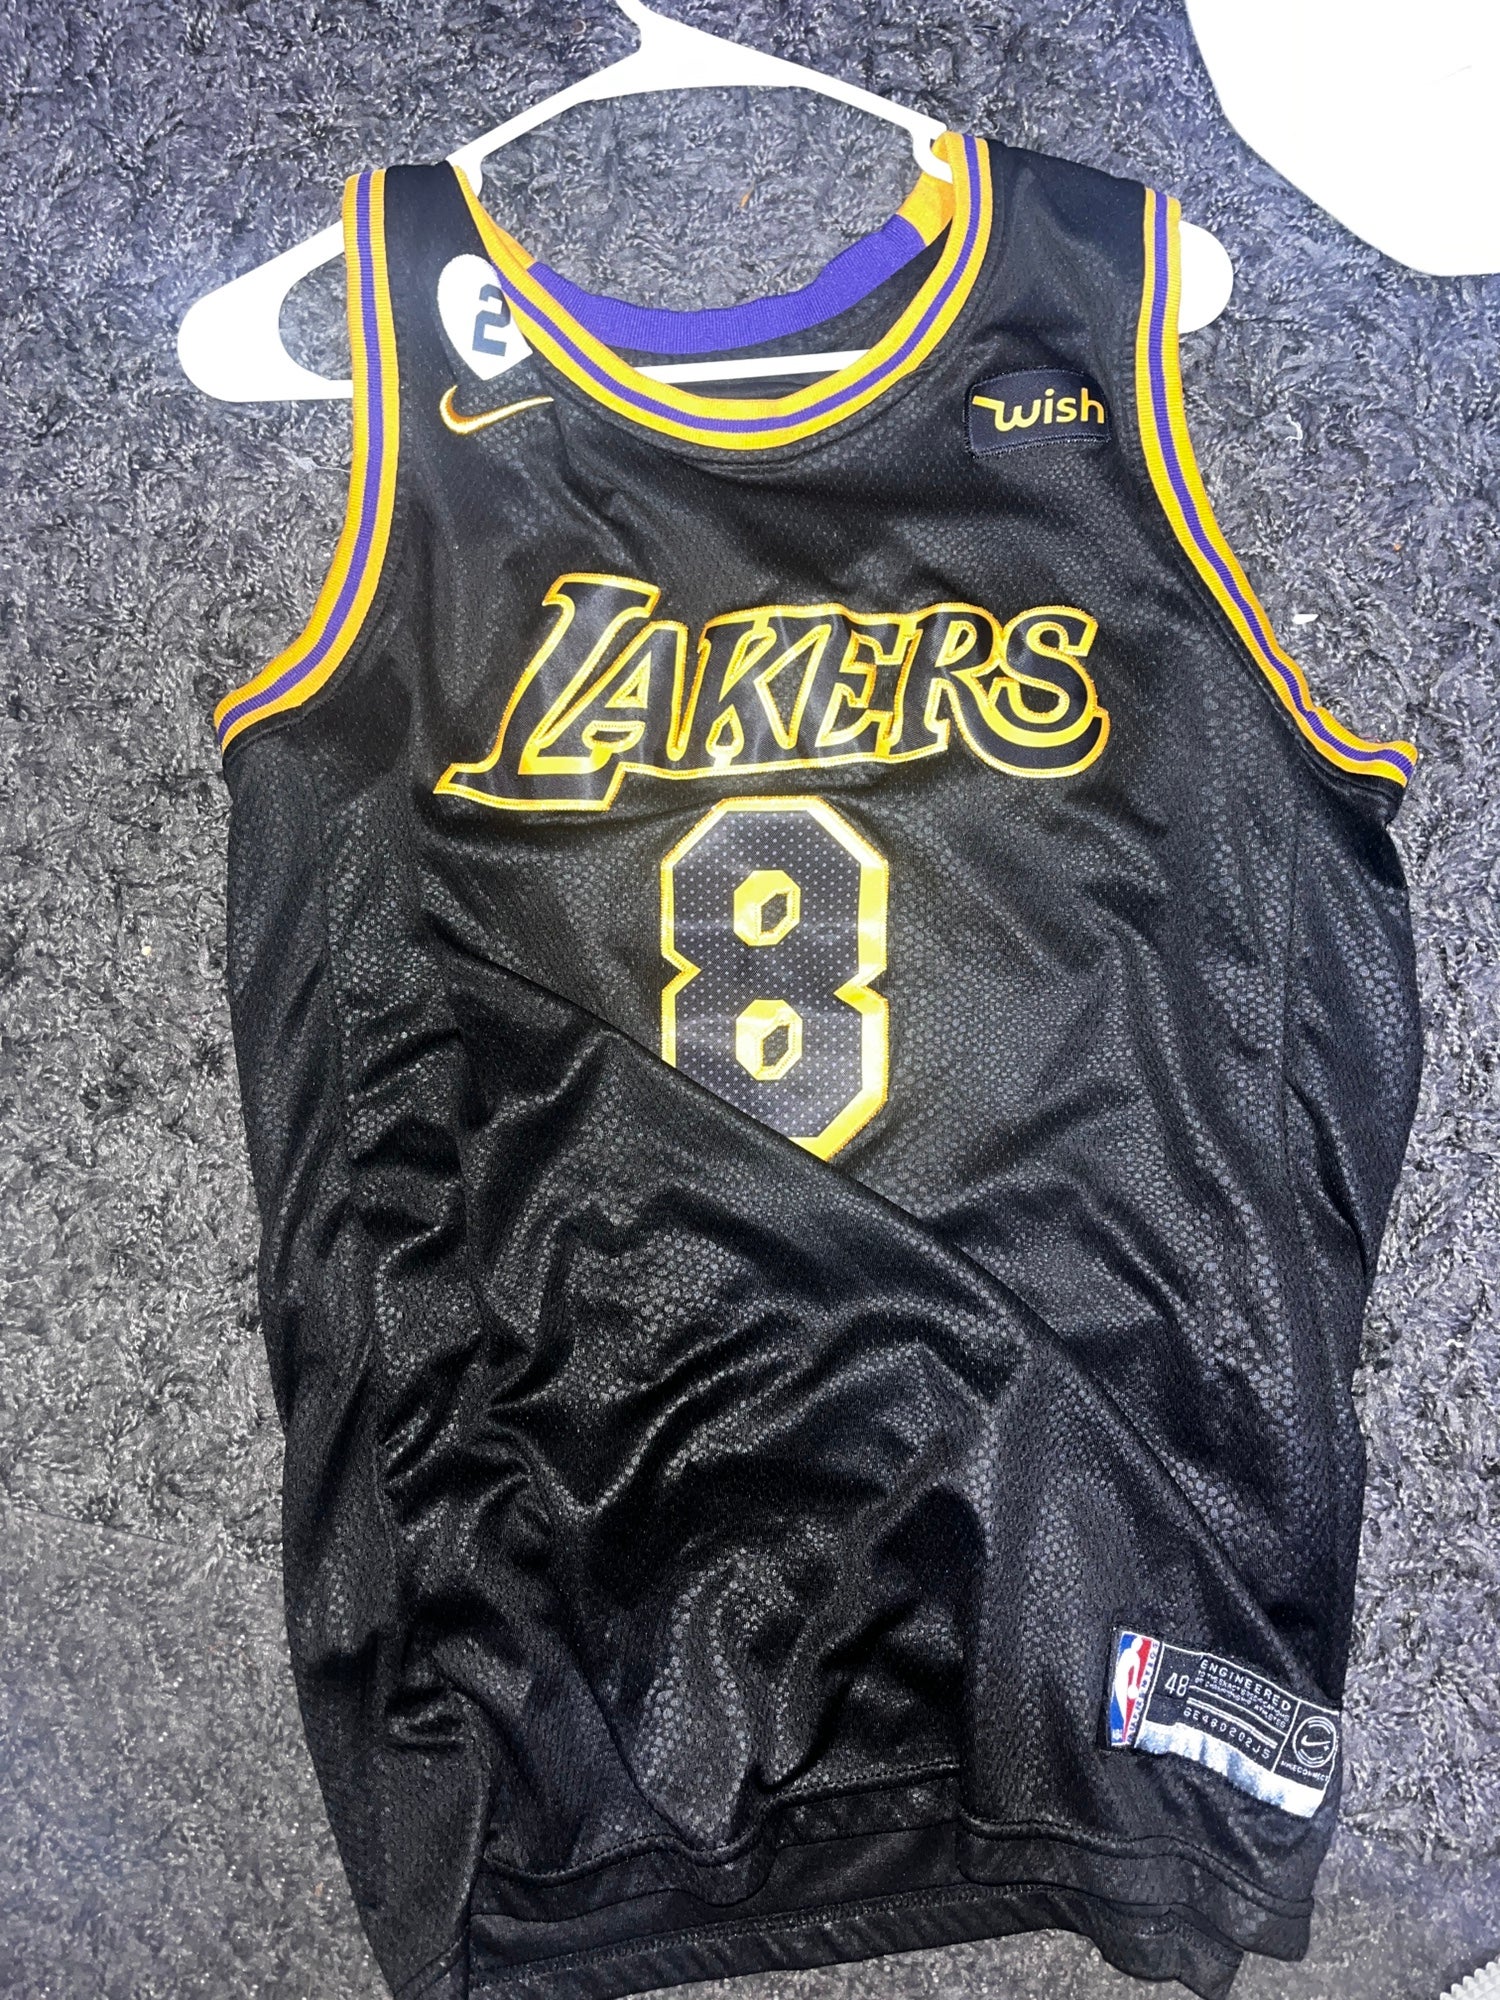 Mamba Basketball NBA Los Angeles Lakers Jersey #8 & #24 Kobe Bryant  Medium